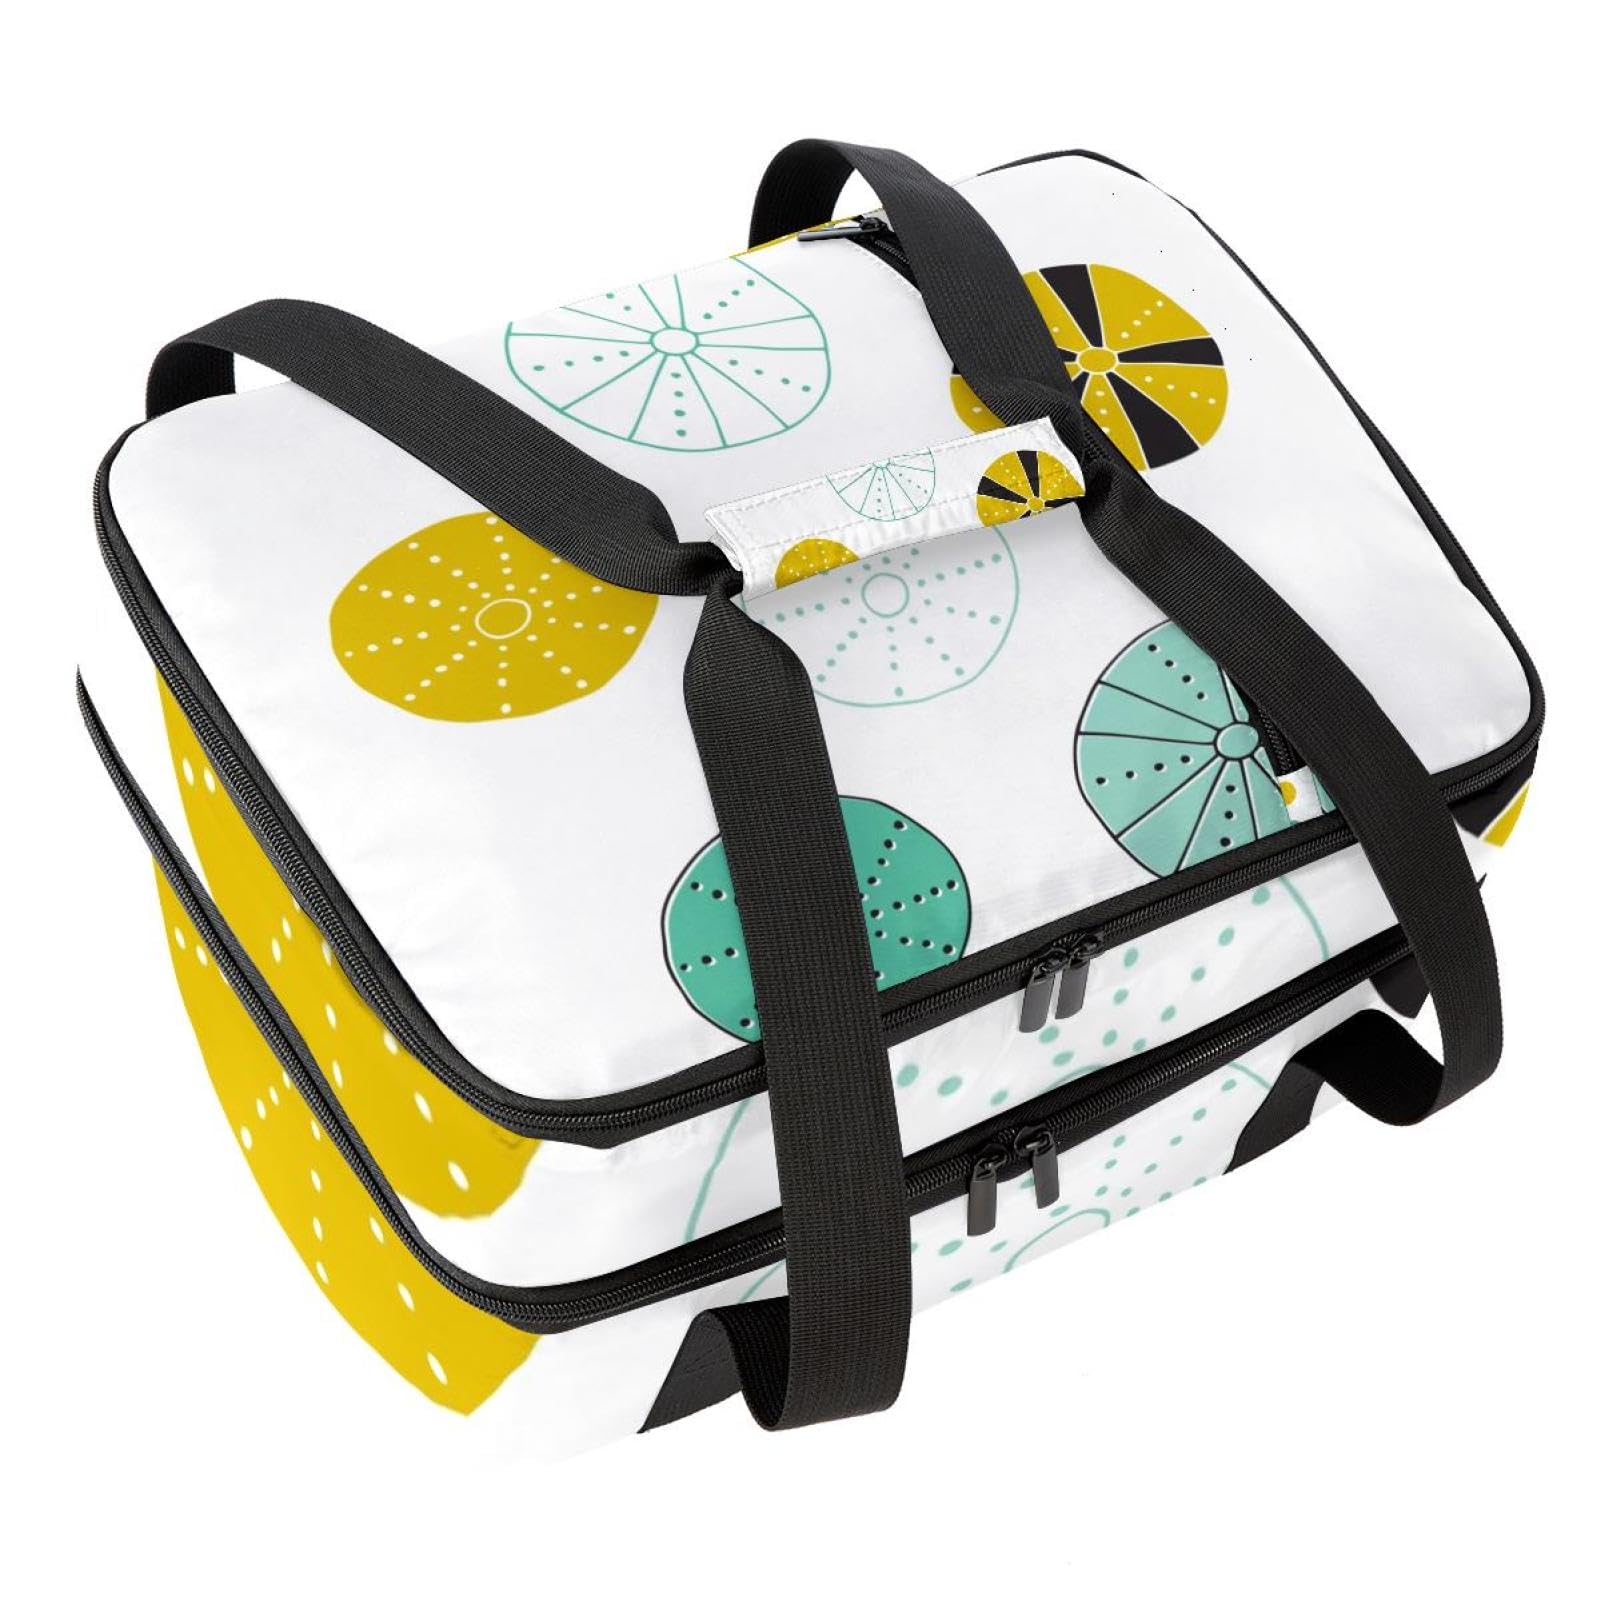 Bag Clipart Digital Shopping Bags Clip Art Brown White Paper Bag Lunch ...